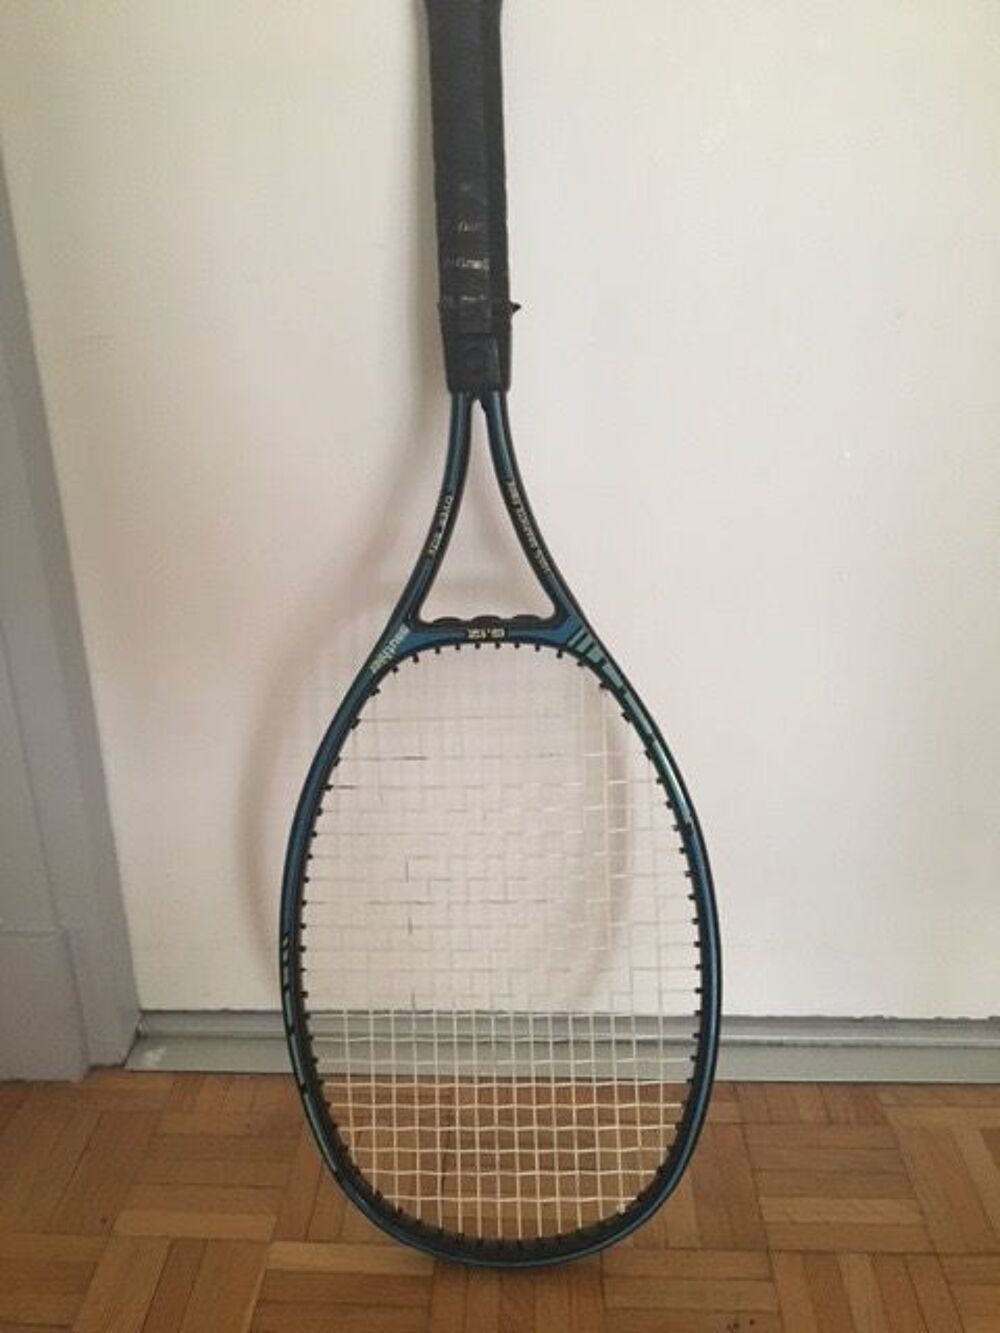 Raquette de tennis adulte grafite fibre de carbone
Sports